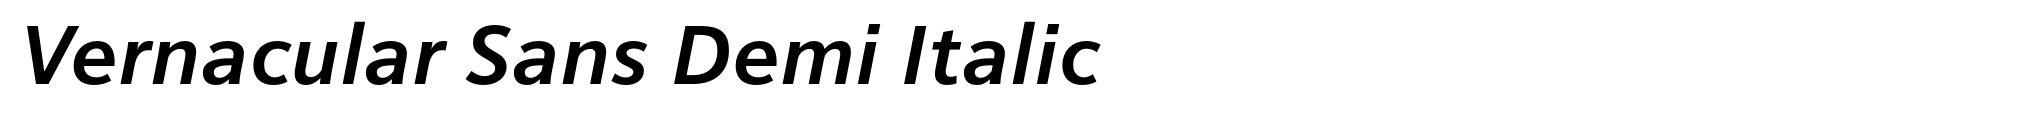 Vernacular Sans Demi Italic image